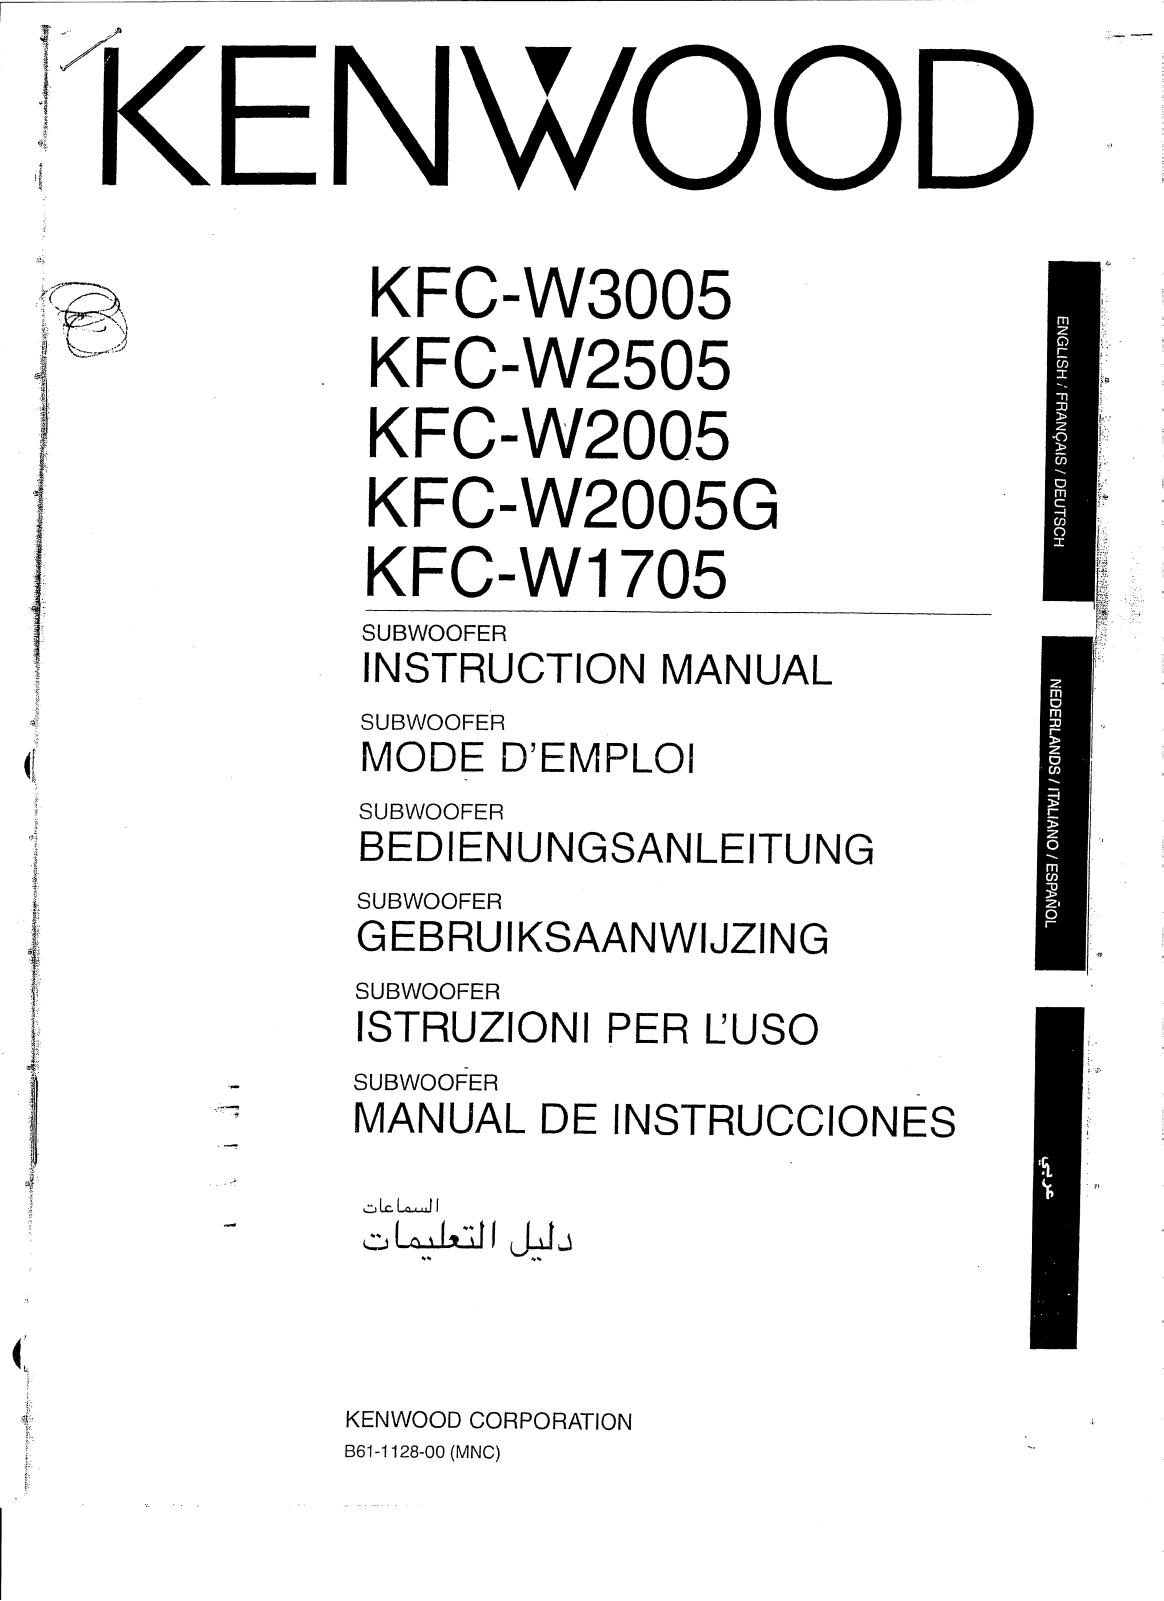 Kenwood KFC-W3005, KFC-W2005, KFC-W2005G, KFC-W2505, KFC-W1705 Owner's Manual